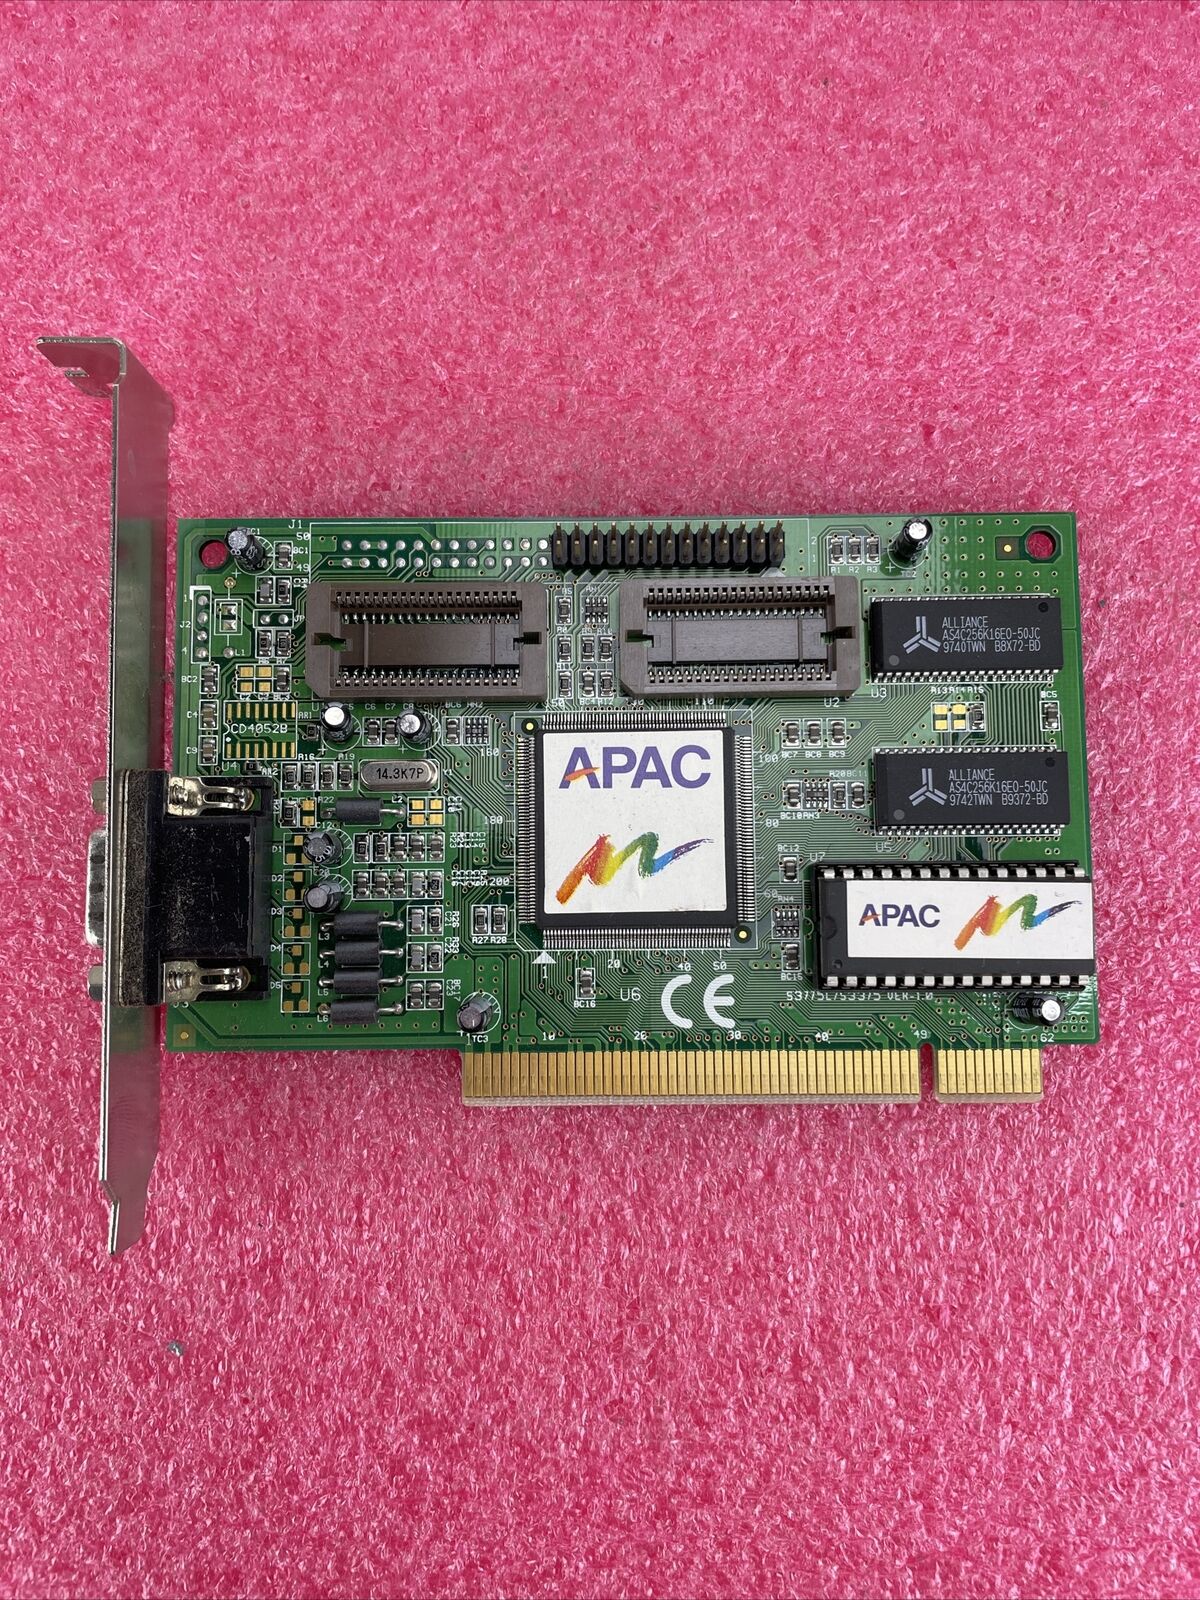 APAC S3 Trio64V2 86C775 2MB PCI Video Adapter, 53775L, 53375